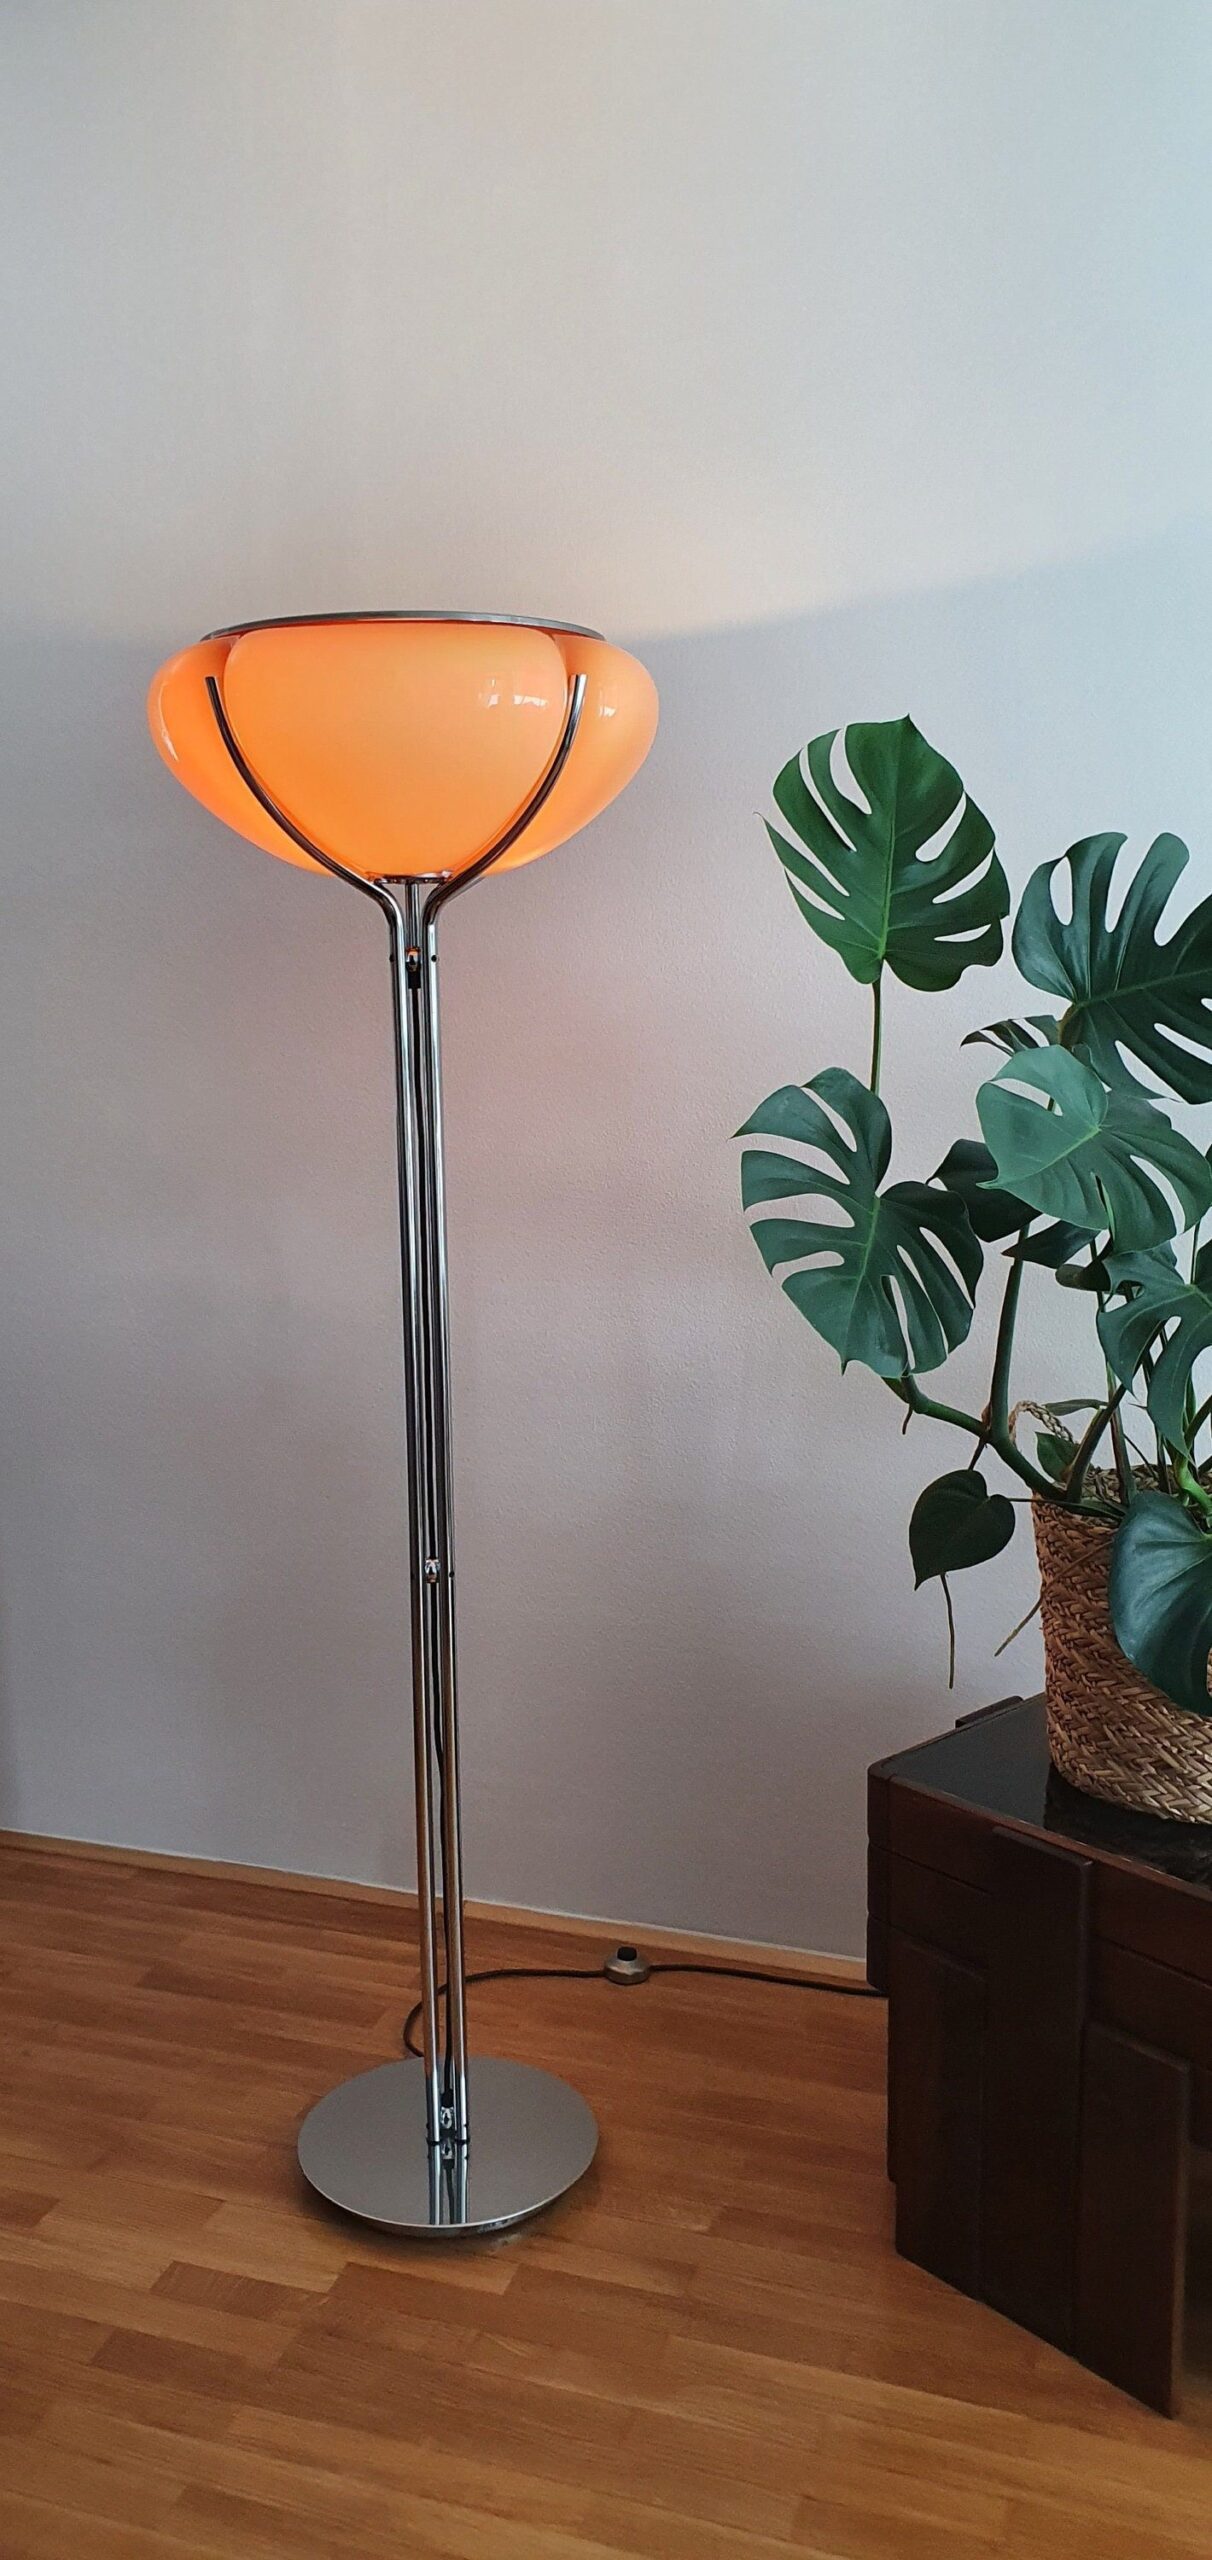 Creative Floor Lamp Ideas to Brighten Up
Your Space